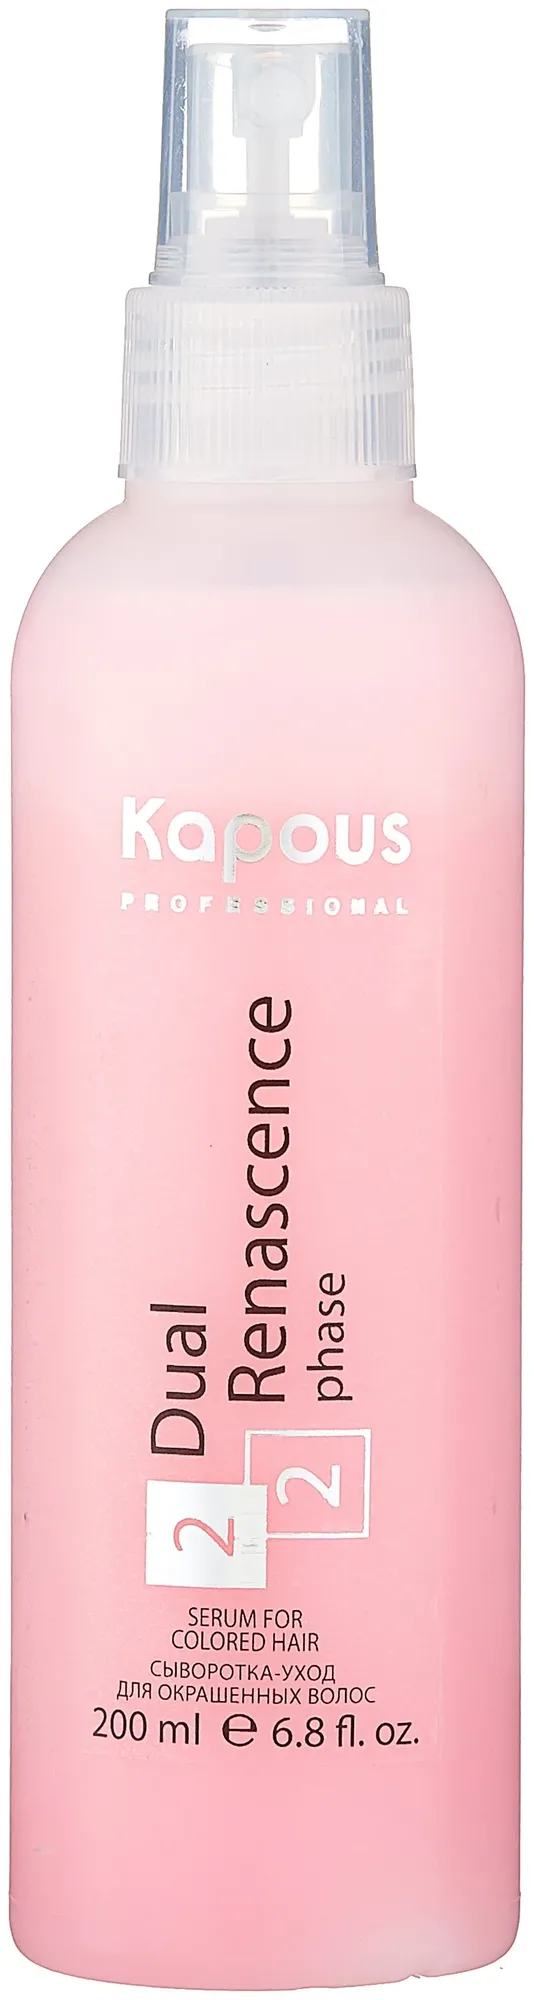 Kapous Сыворотка-уход для окрашенных волос Dual Renascence 2 phase, 200 мл